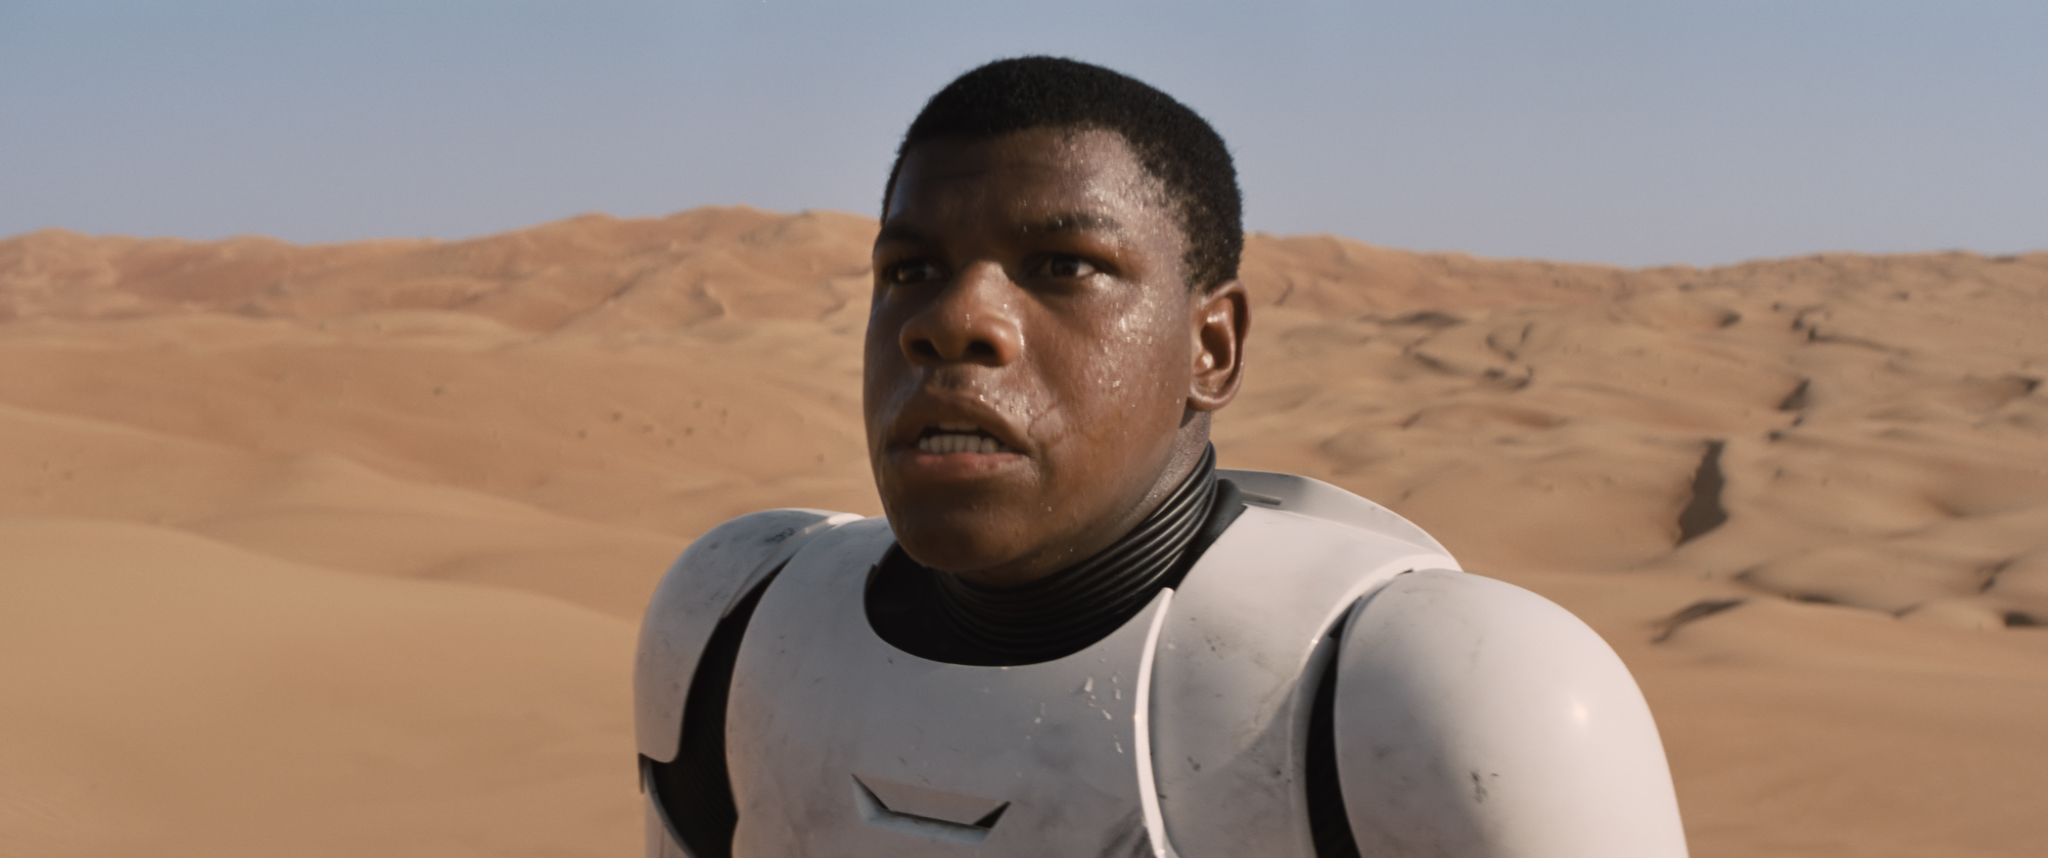 John Boyega portrays a stormtrooper in the new Star Wars movie.